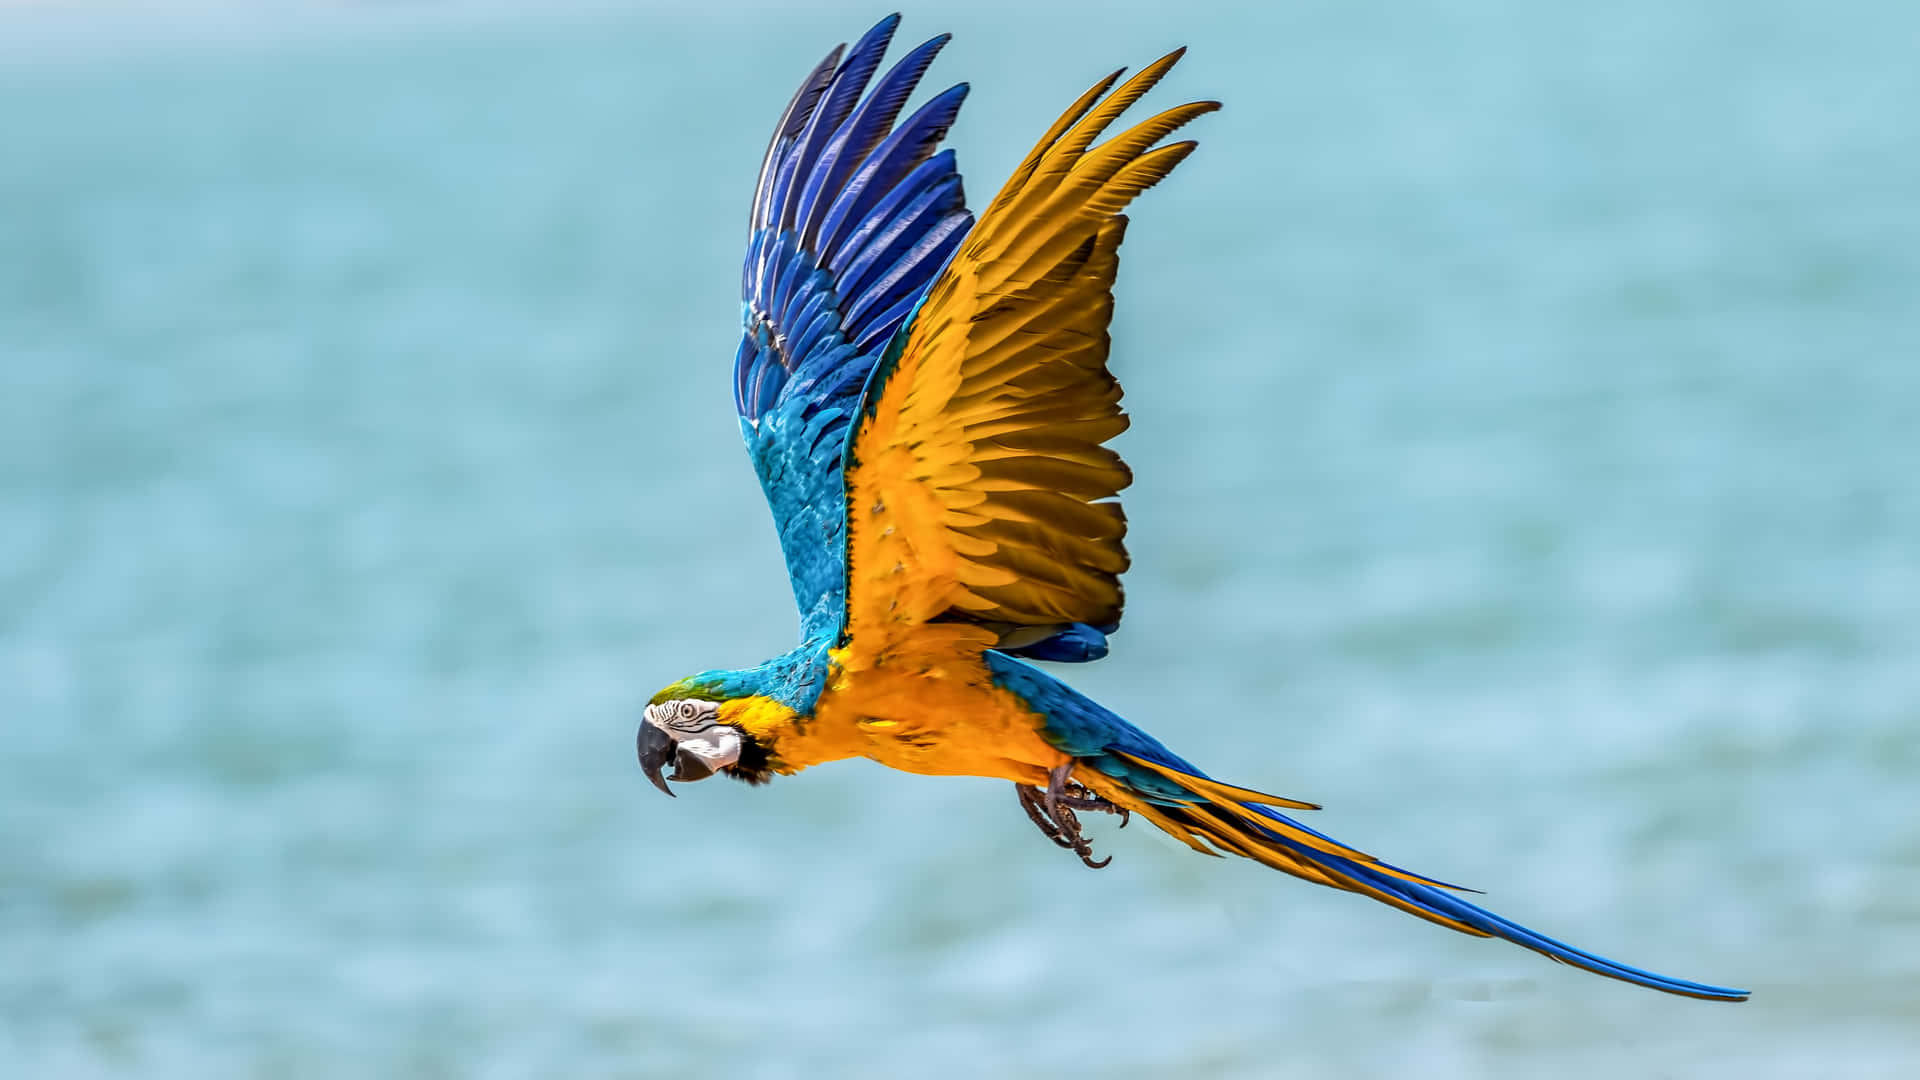 Blueand Yellow Macawin Flight Wallpaper